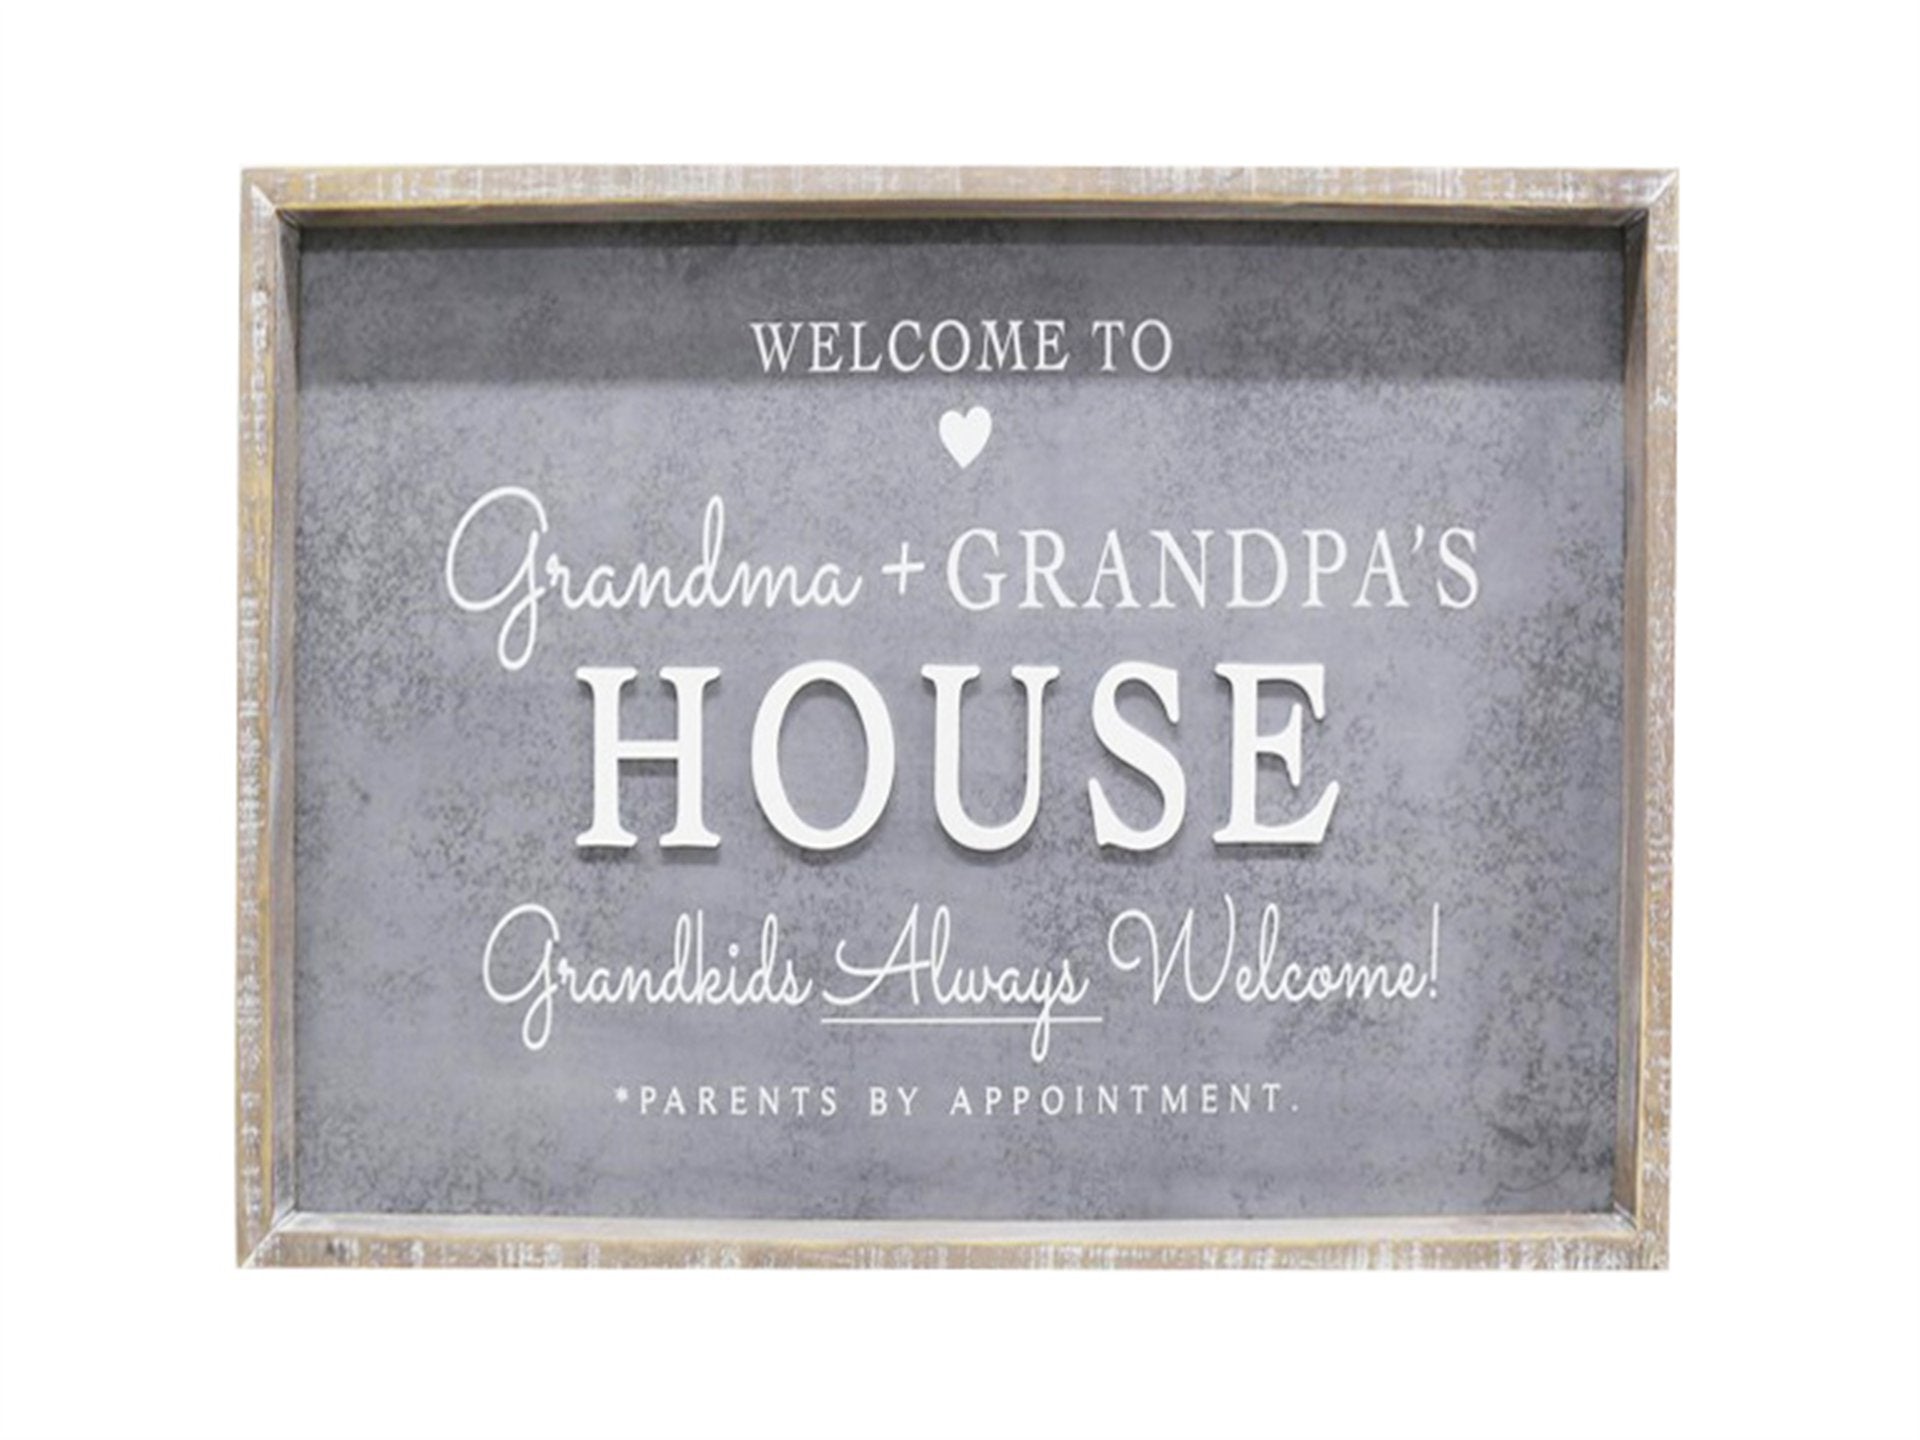 Welcome to Grandma and Grandpa's House